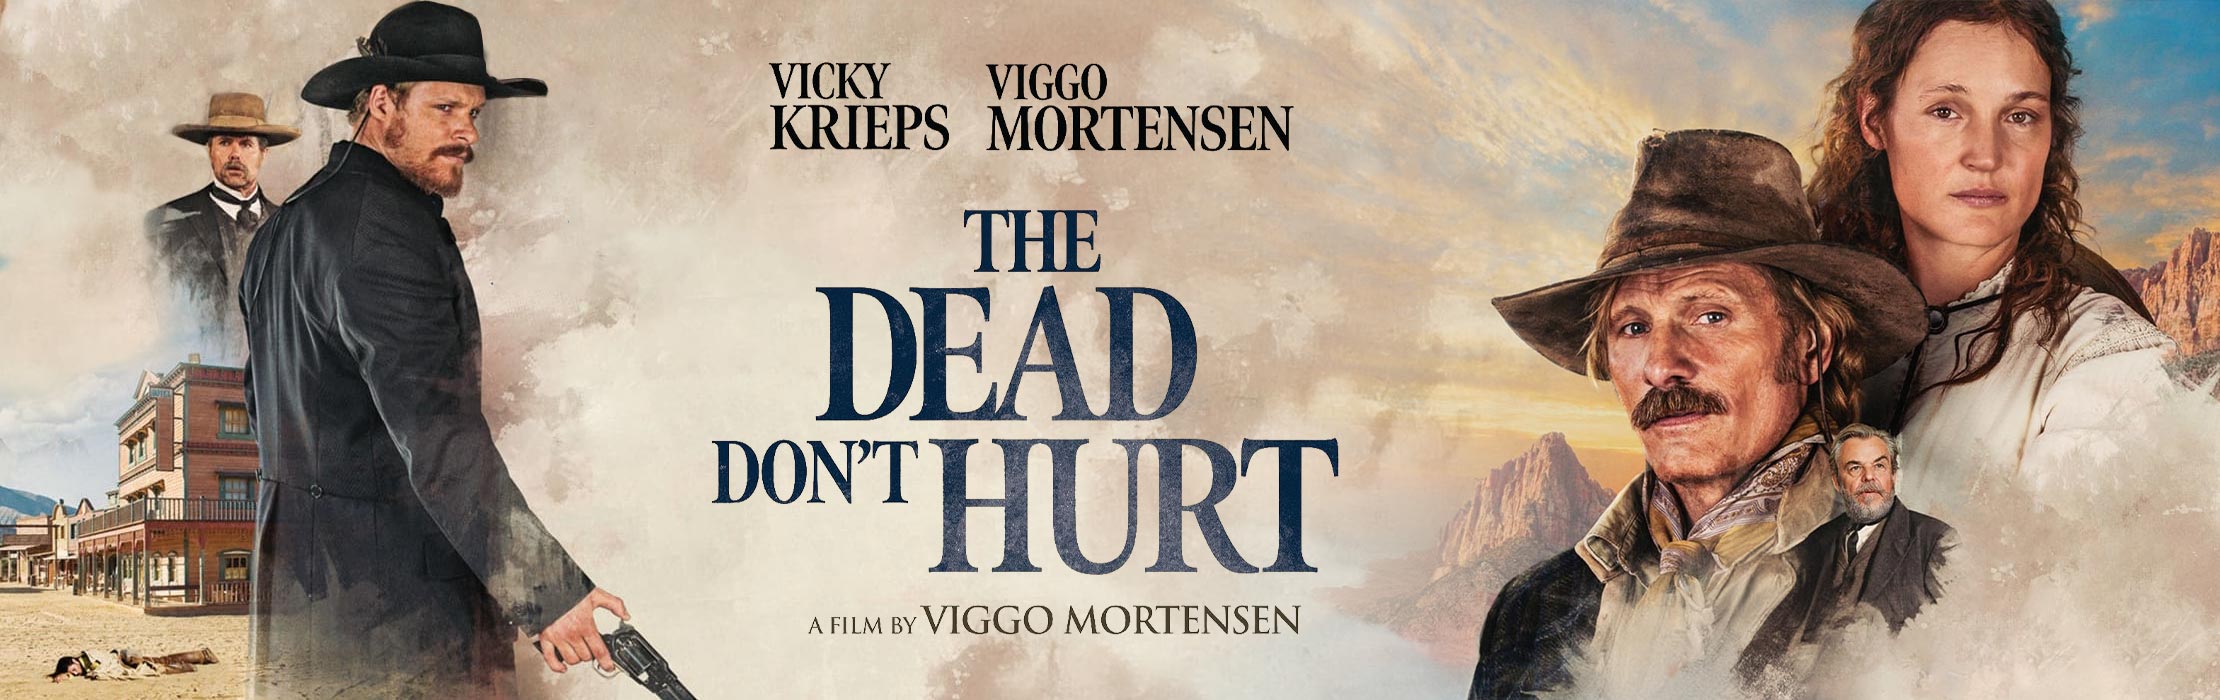 /film/The-Dead-Dont-Hurt